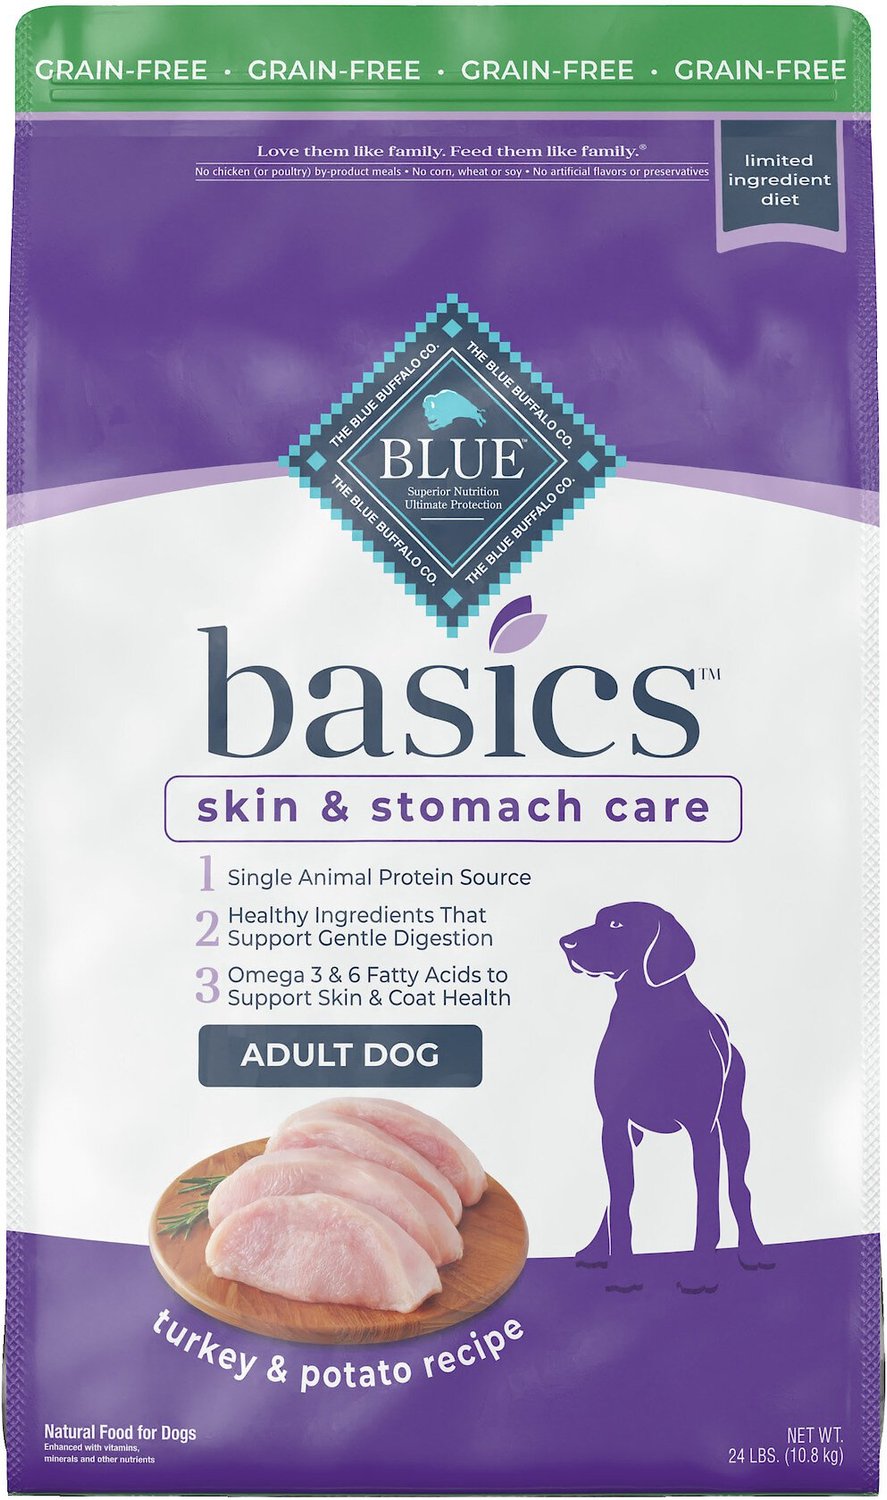 Blue Buffalo Basics Limited Ingredient Diet Turkey & Potato Recipe